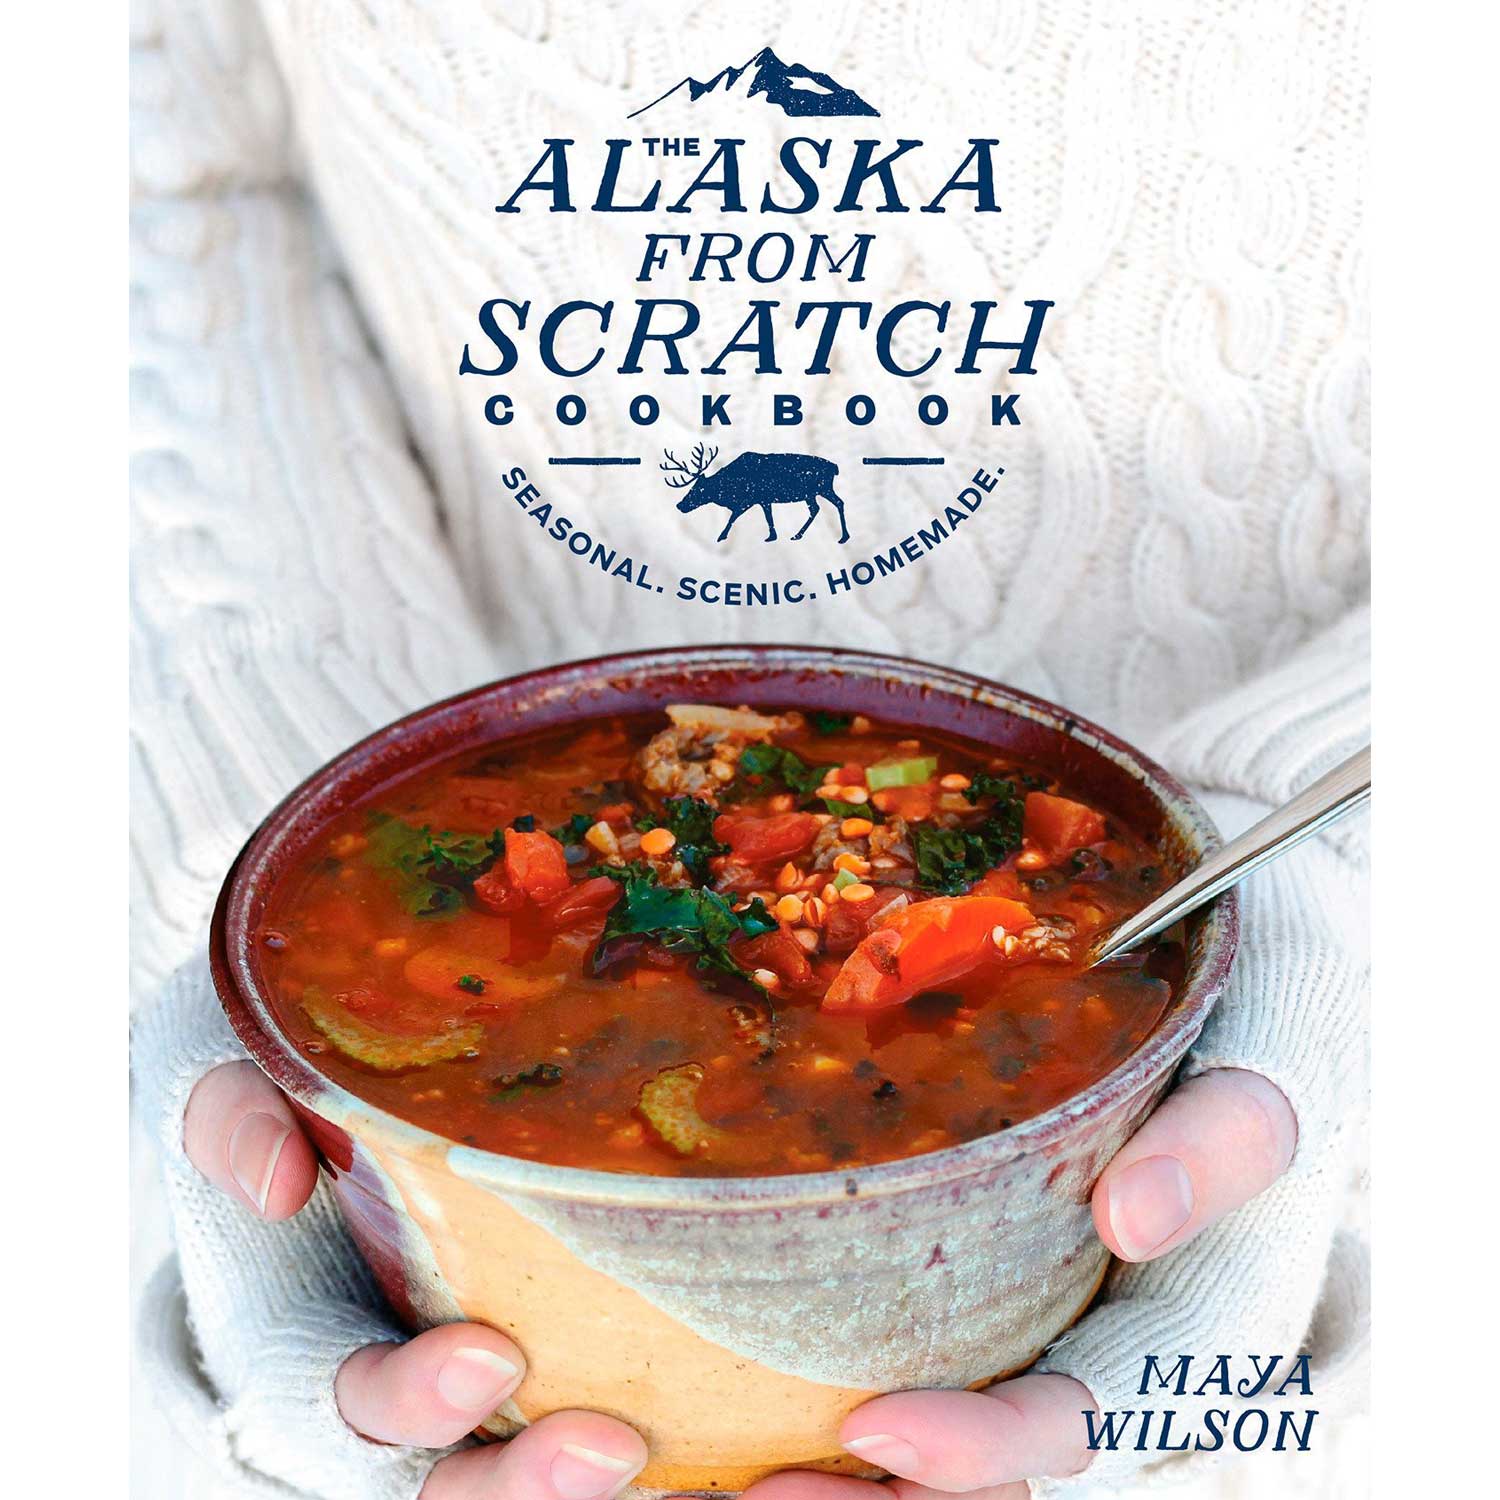 The Alaska from Scratch Cookbook by Maya Wilson